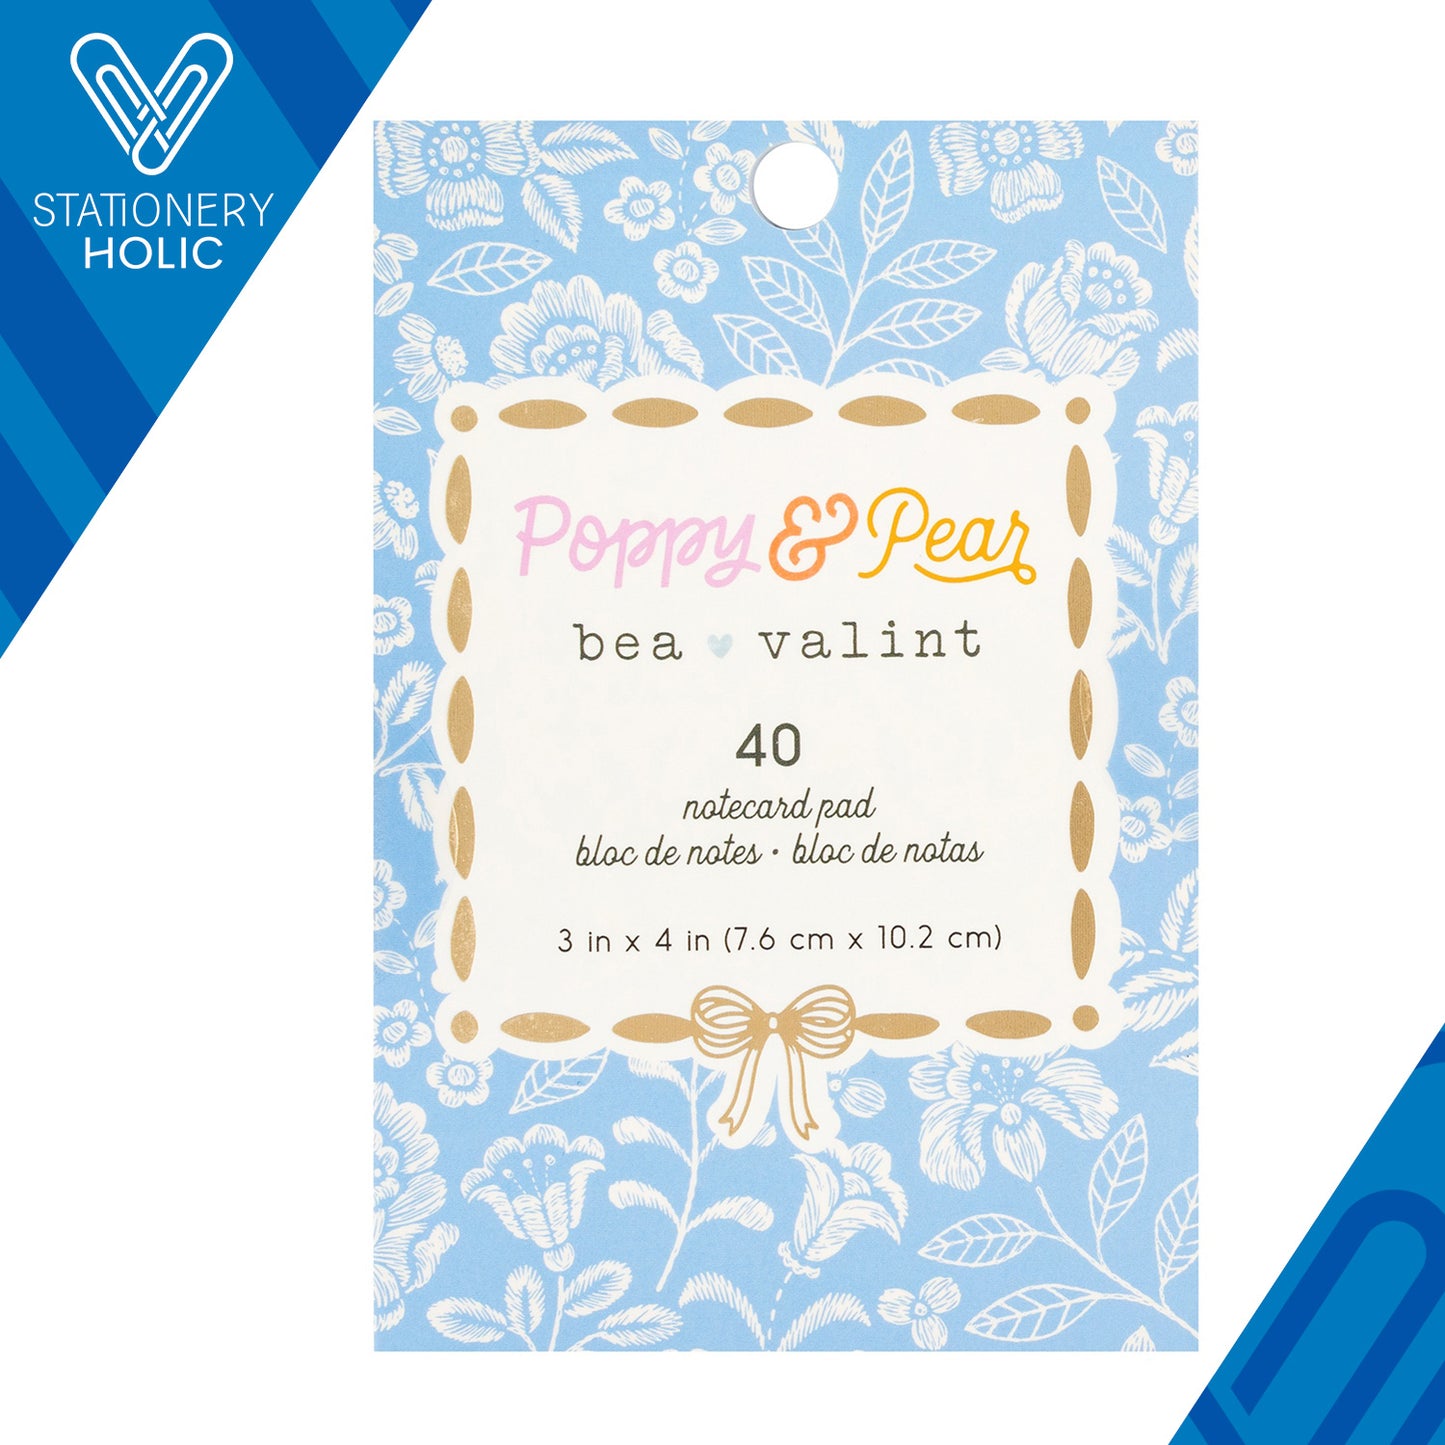 Bea Valint - 3 x 4 Journaling Cards - Poppy & Pear